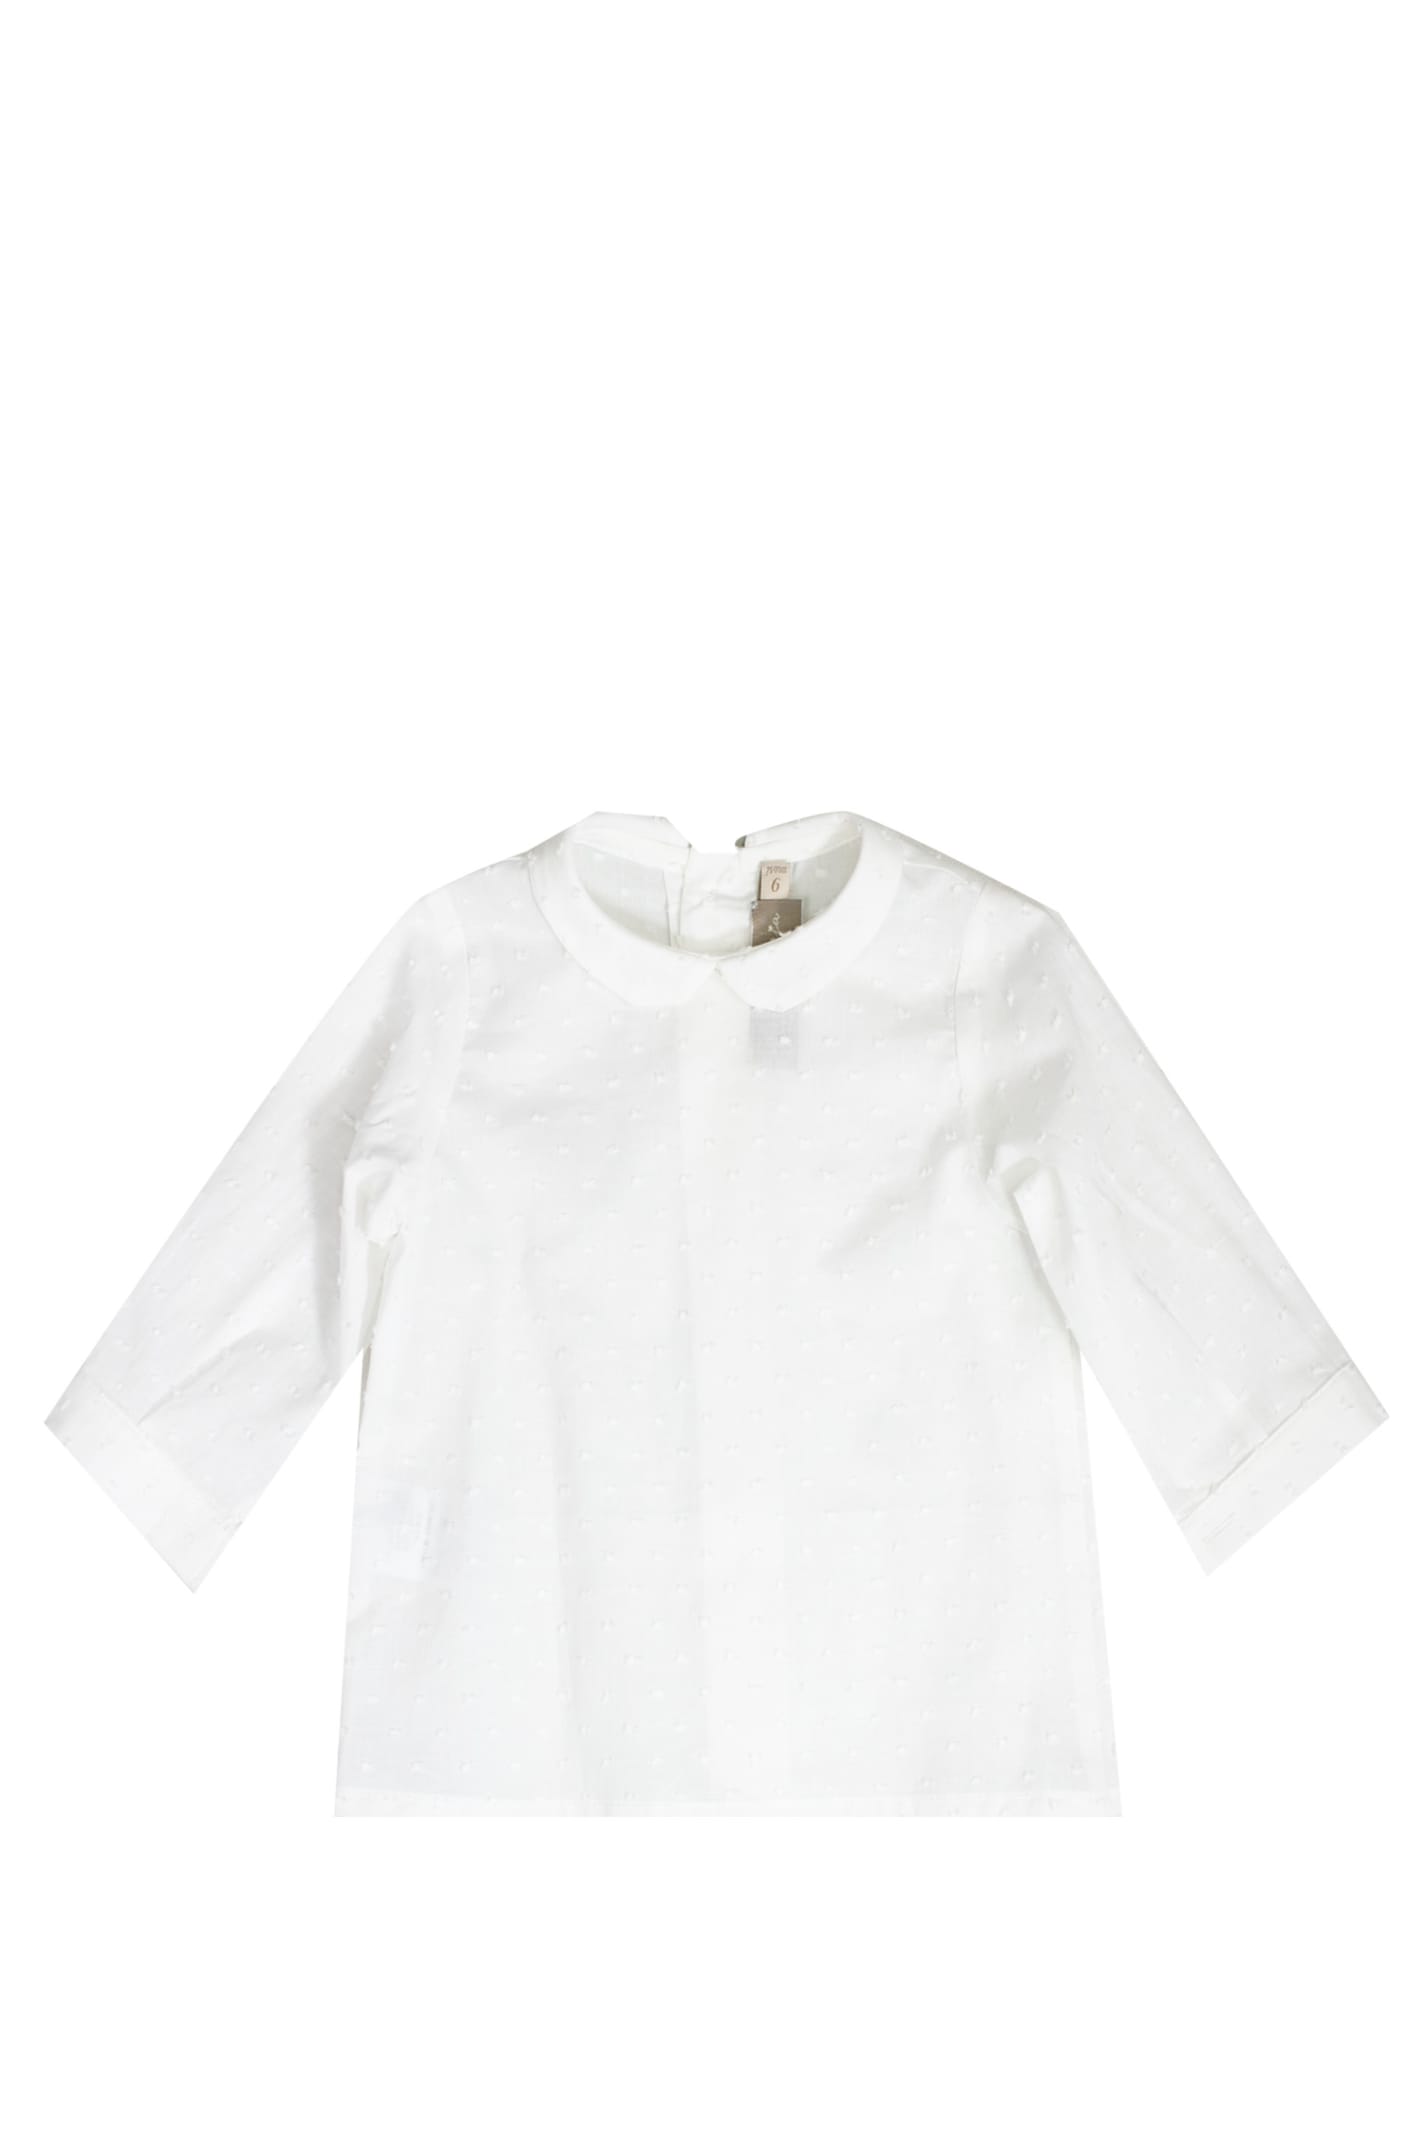 La Stupenderia Babies' Cotton Shirt In White